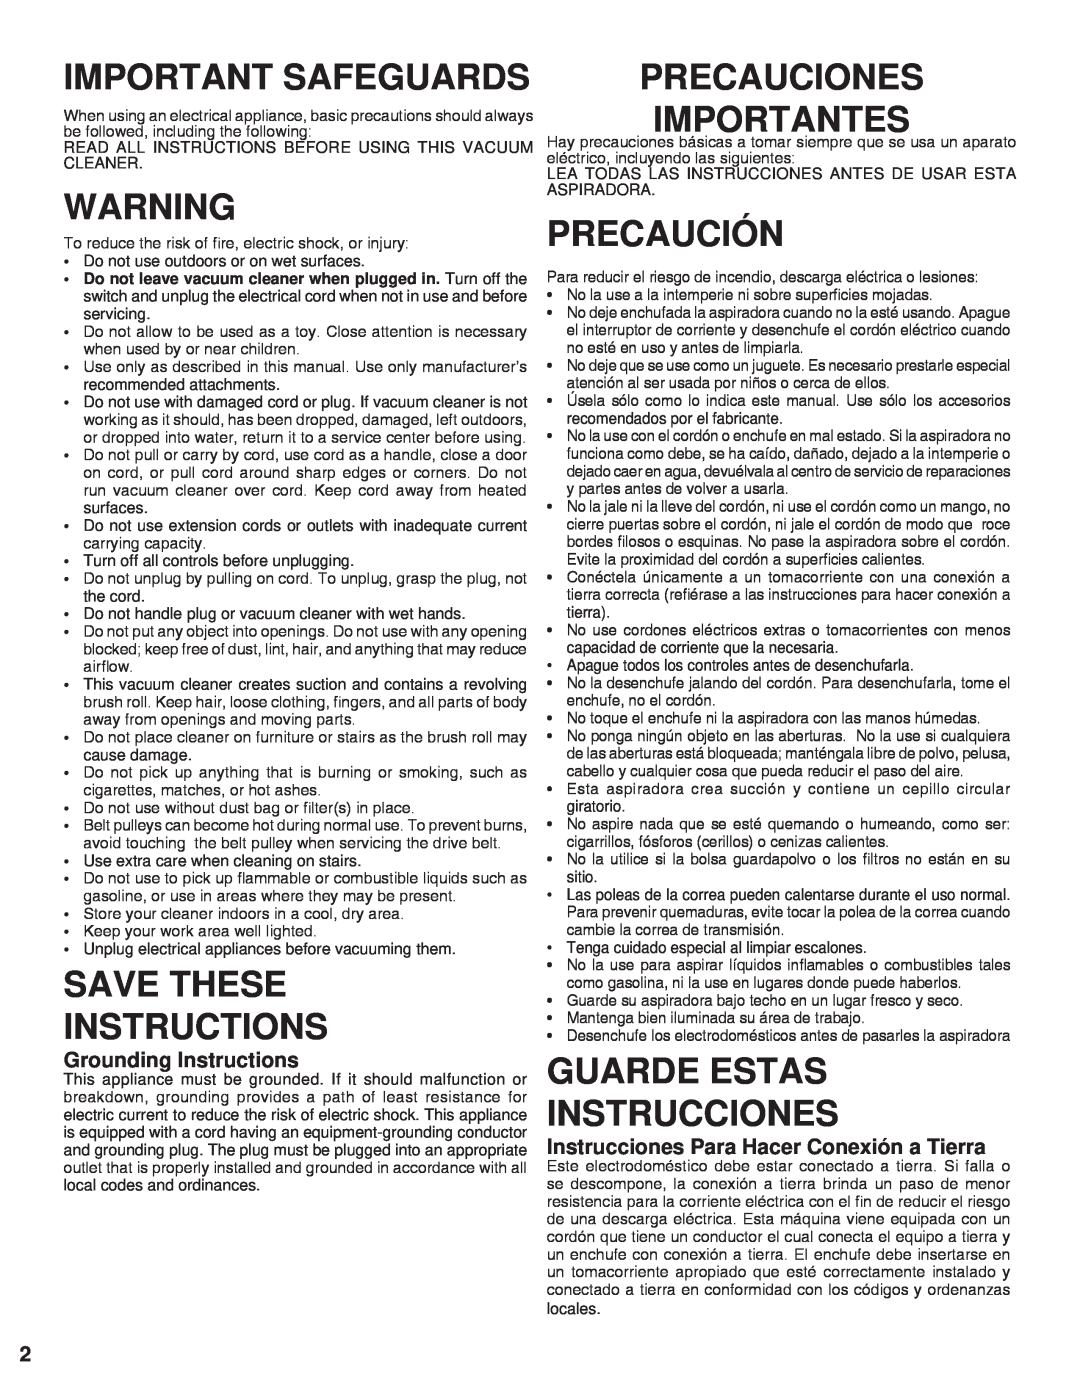 Sanitaire 9050 Important Safeguards, Save These Instructions, Precauciones Importantes, Precaución, Grounding Instructions 